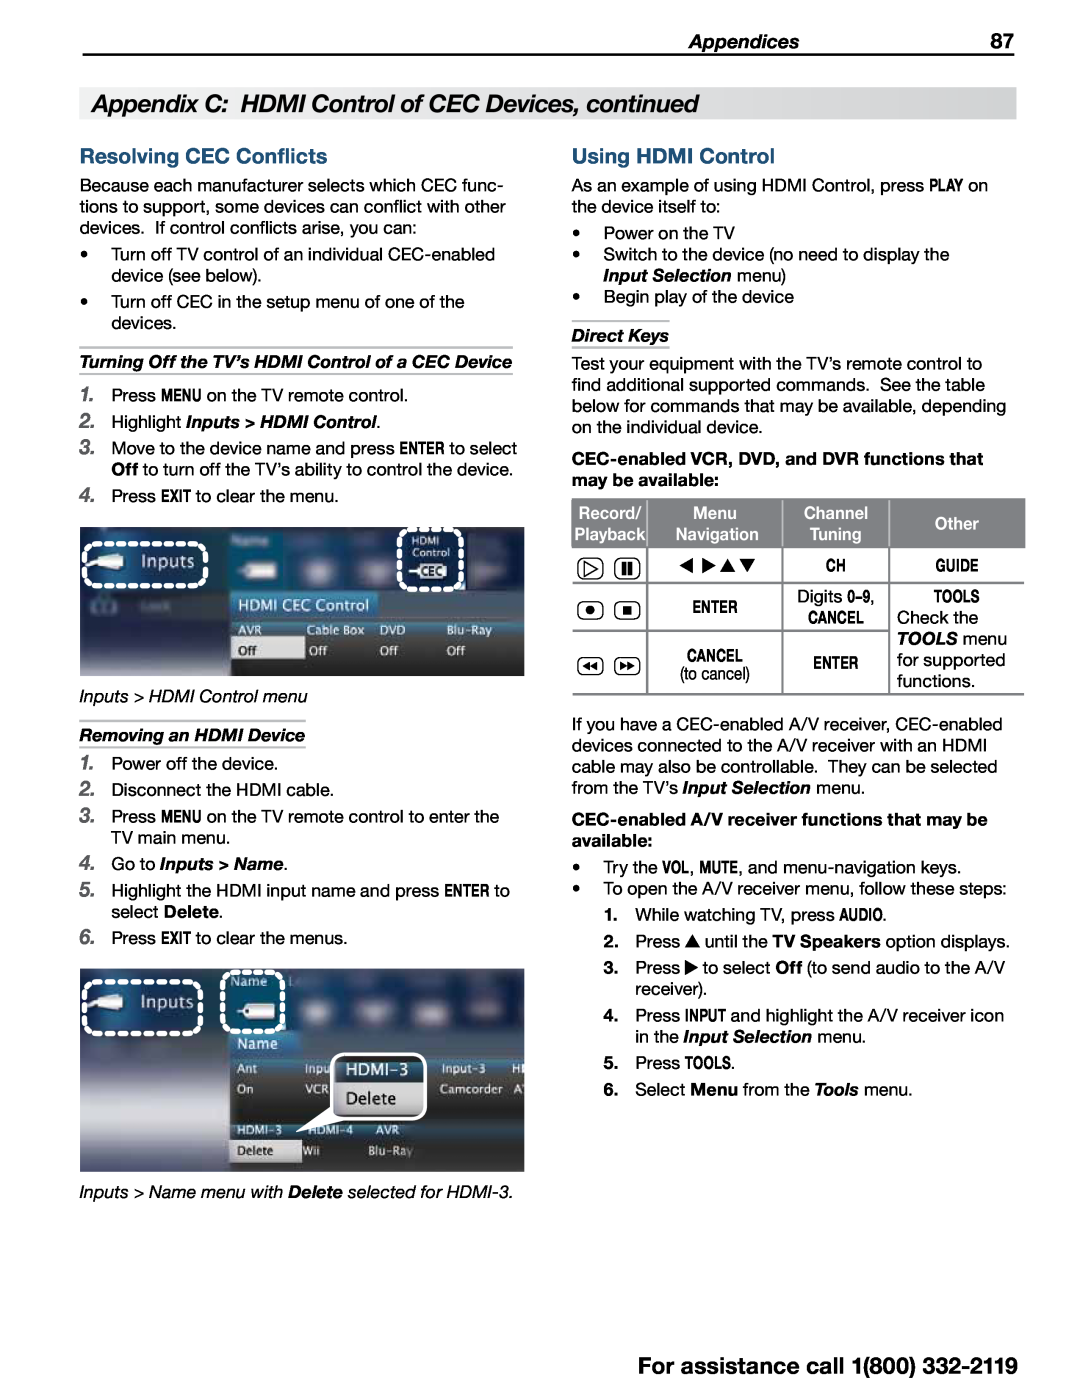 Mitsubishi Electronics 838 SERIES Resolving CEC Conflicts, Using HDMI Control, Appendices87, Highlight Inputs HDMI Control 